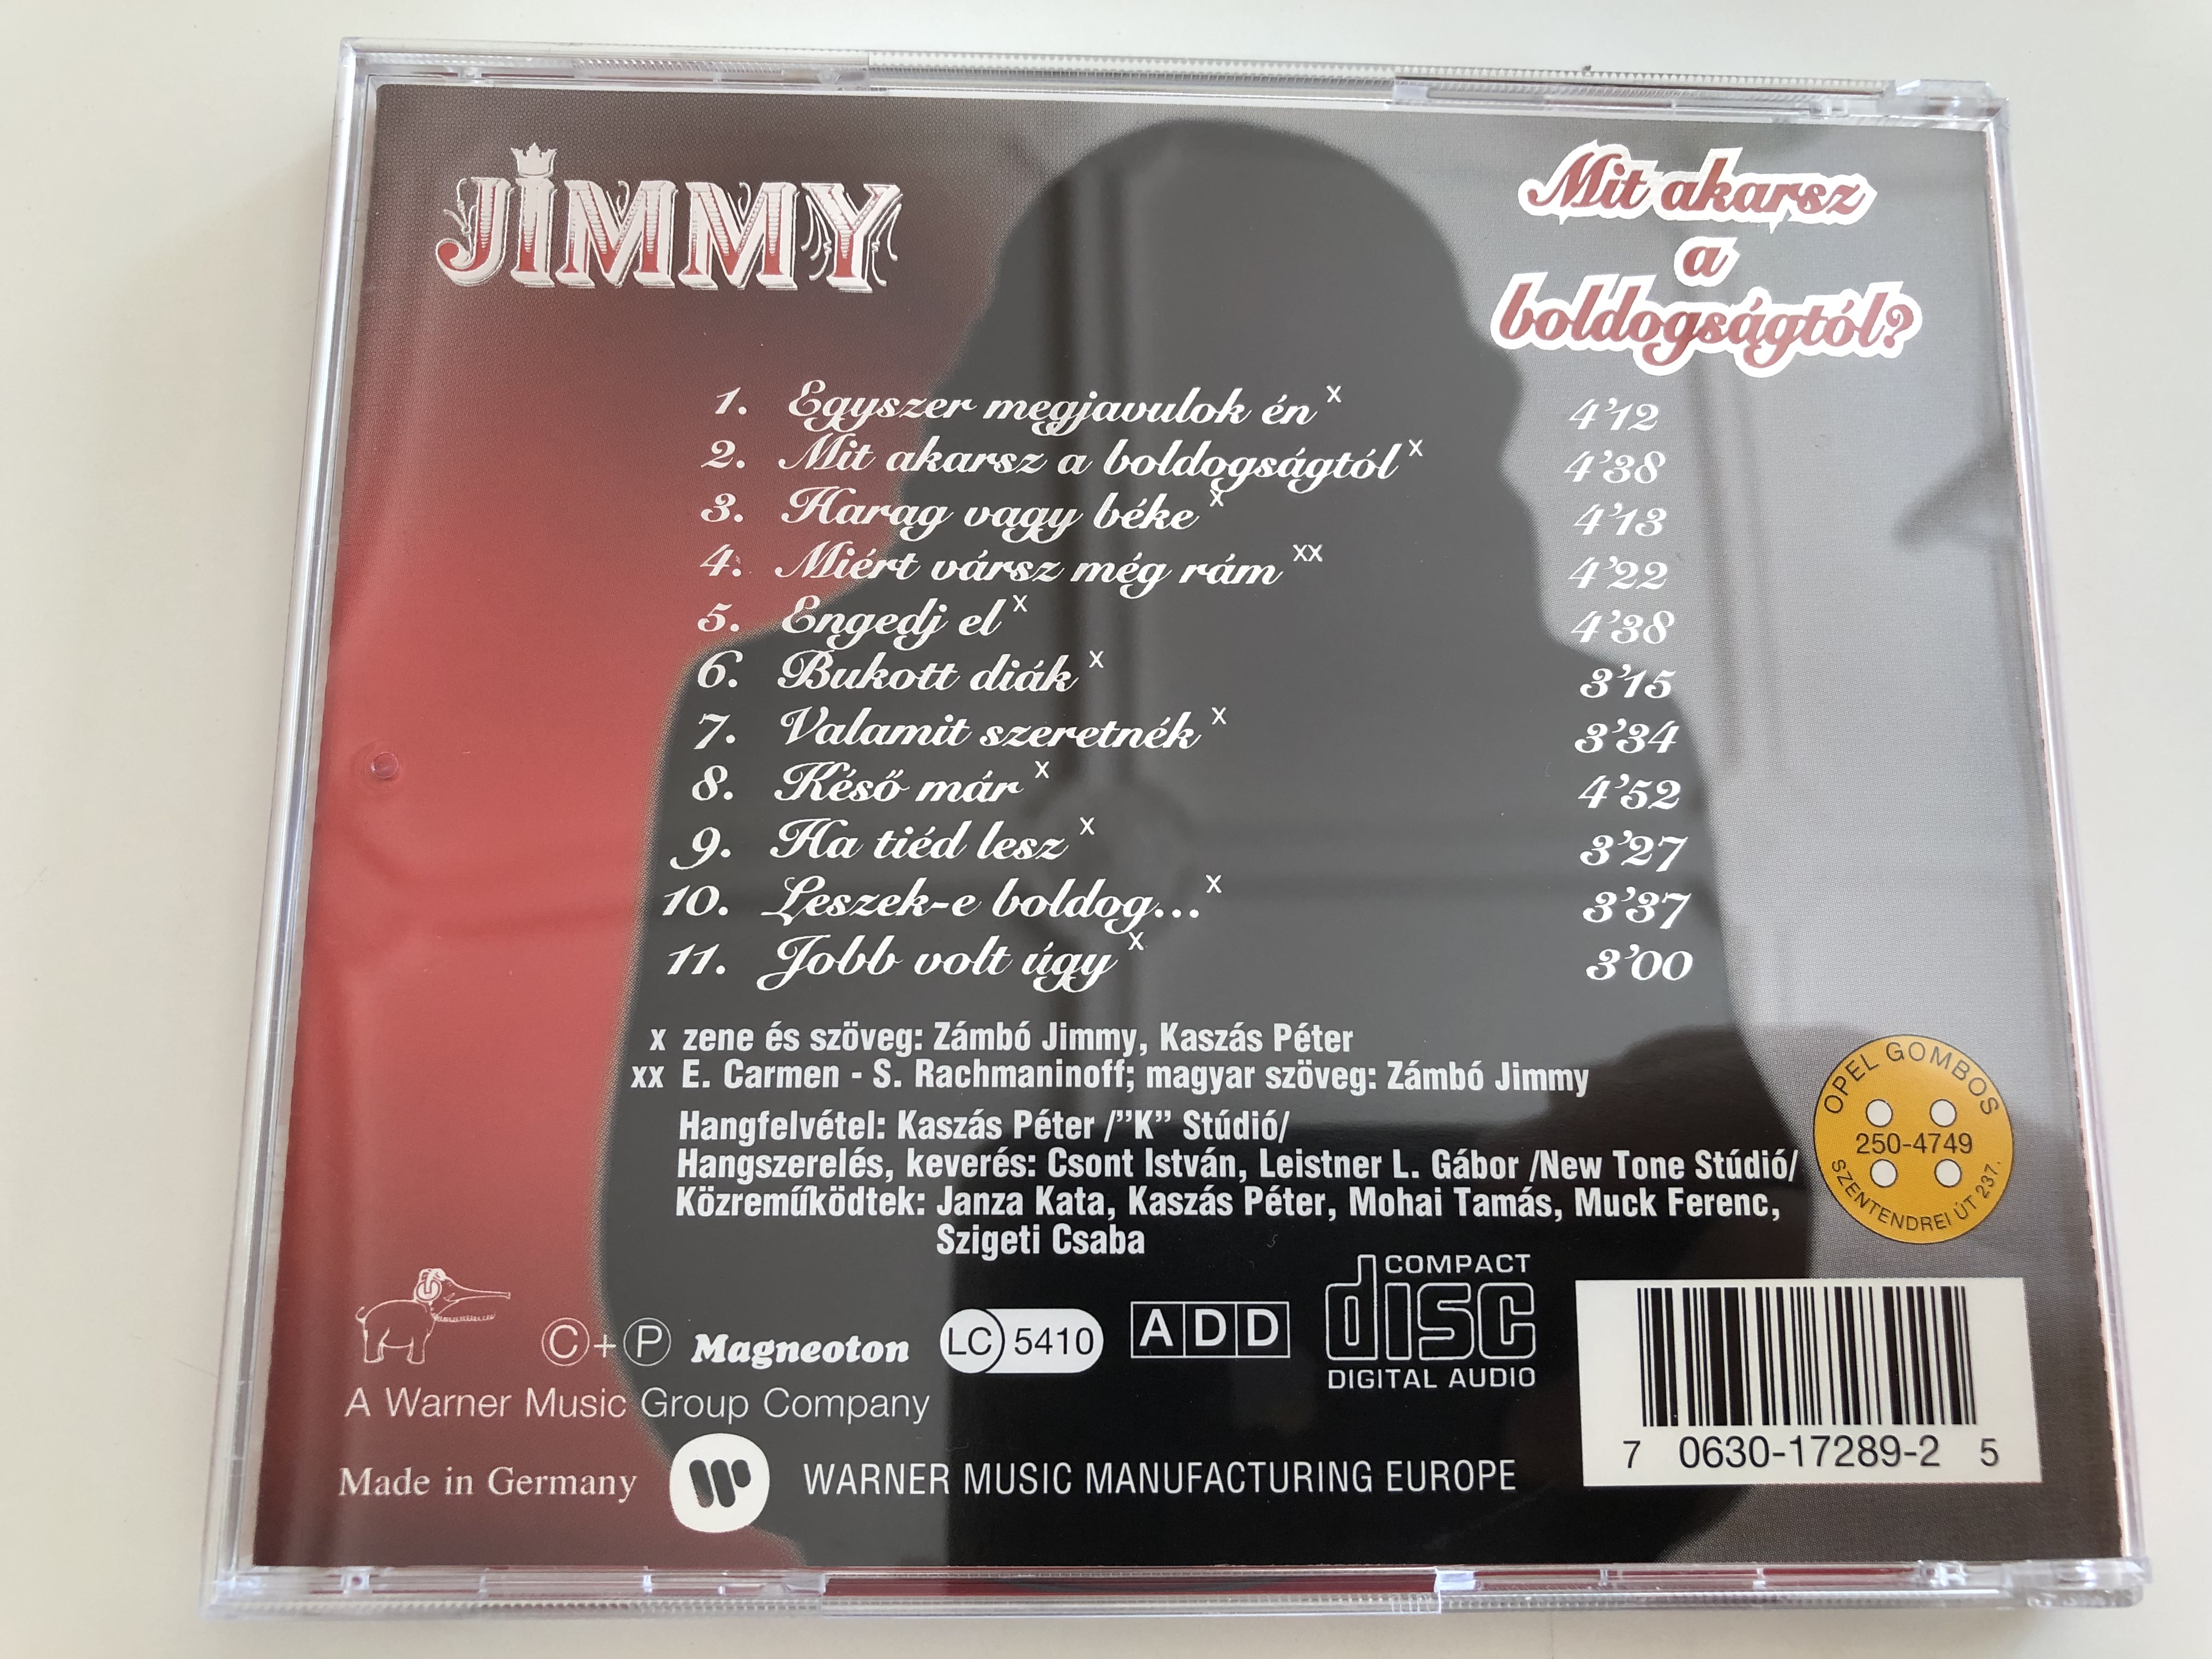 jimmy-mit-akarsz-a-boldogs-gt-l-engedj-el-bukott-di-k-ha-ti-d-lesz-jobb-volt-gy-magneoton-audio-cd-1996-6-.jpg